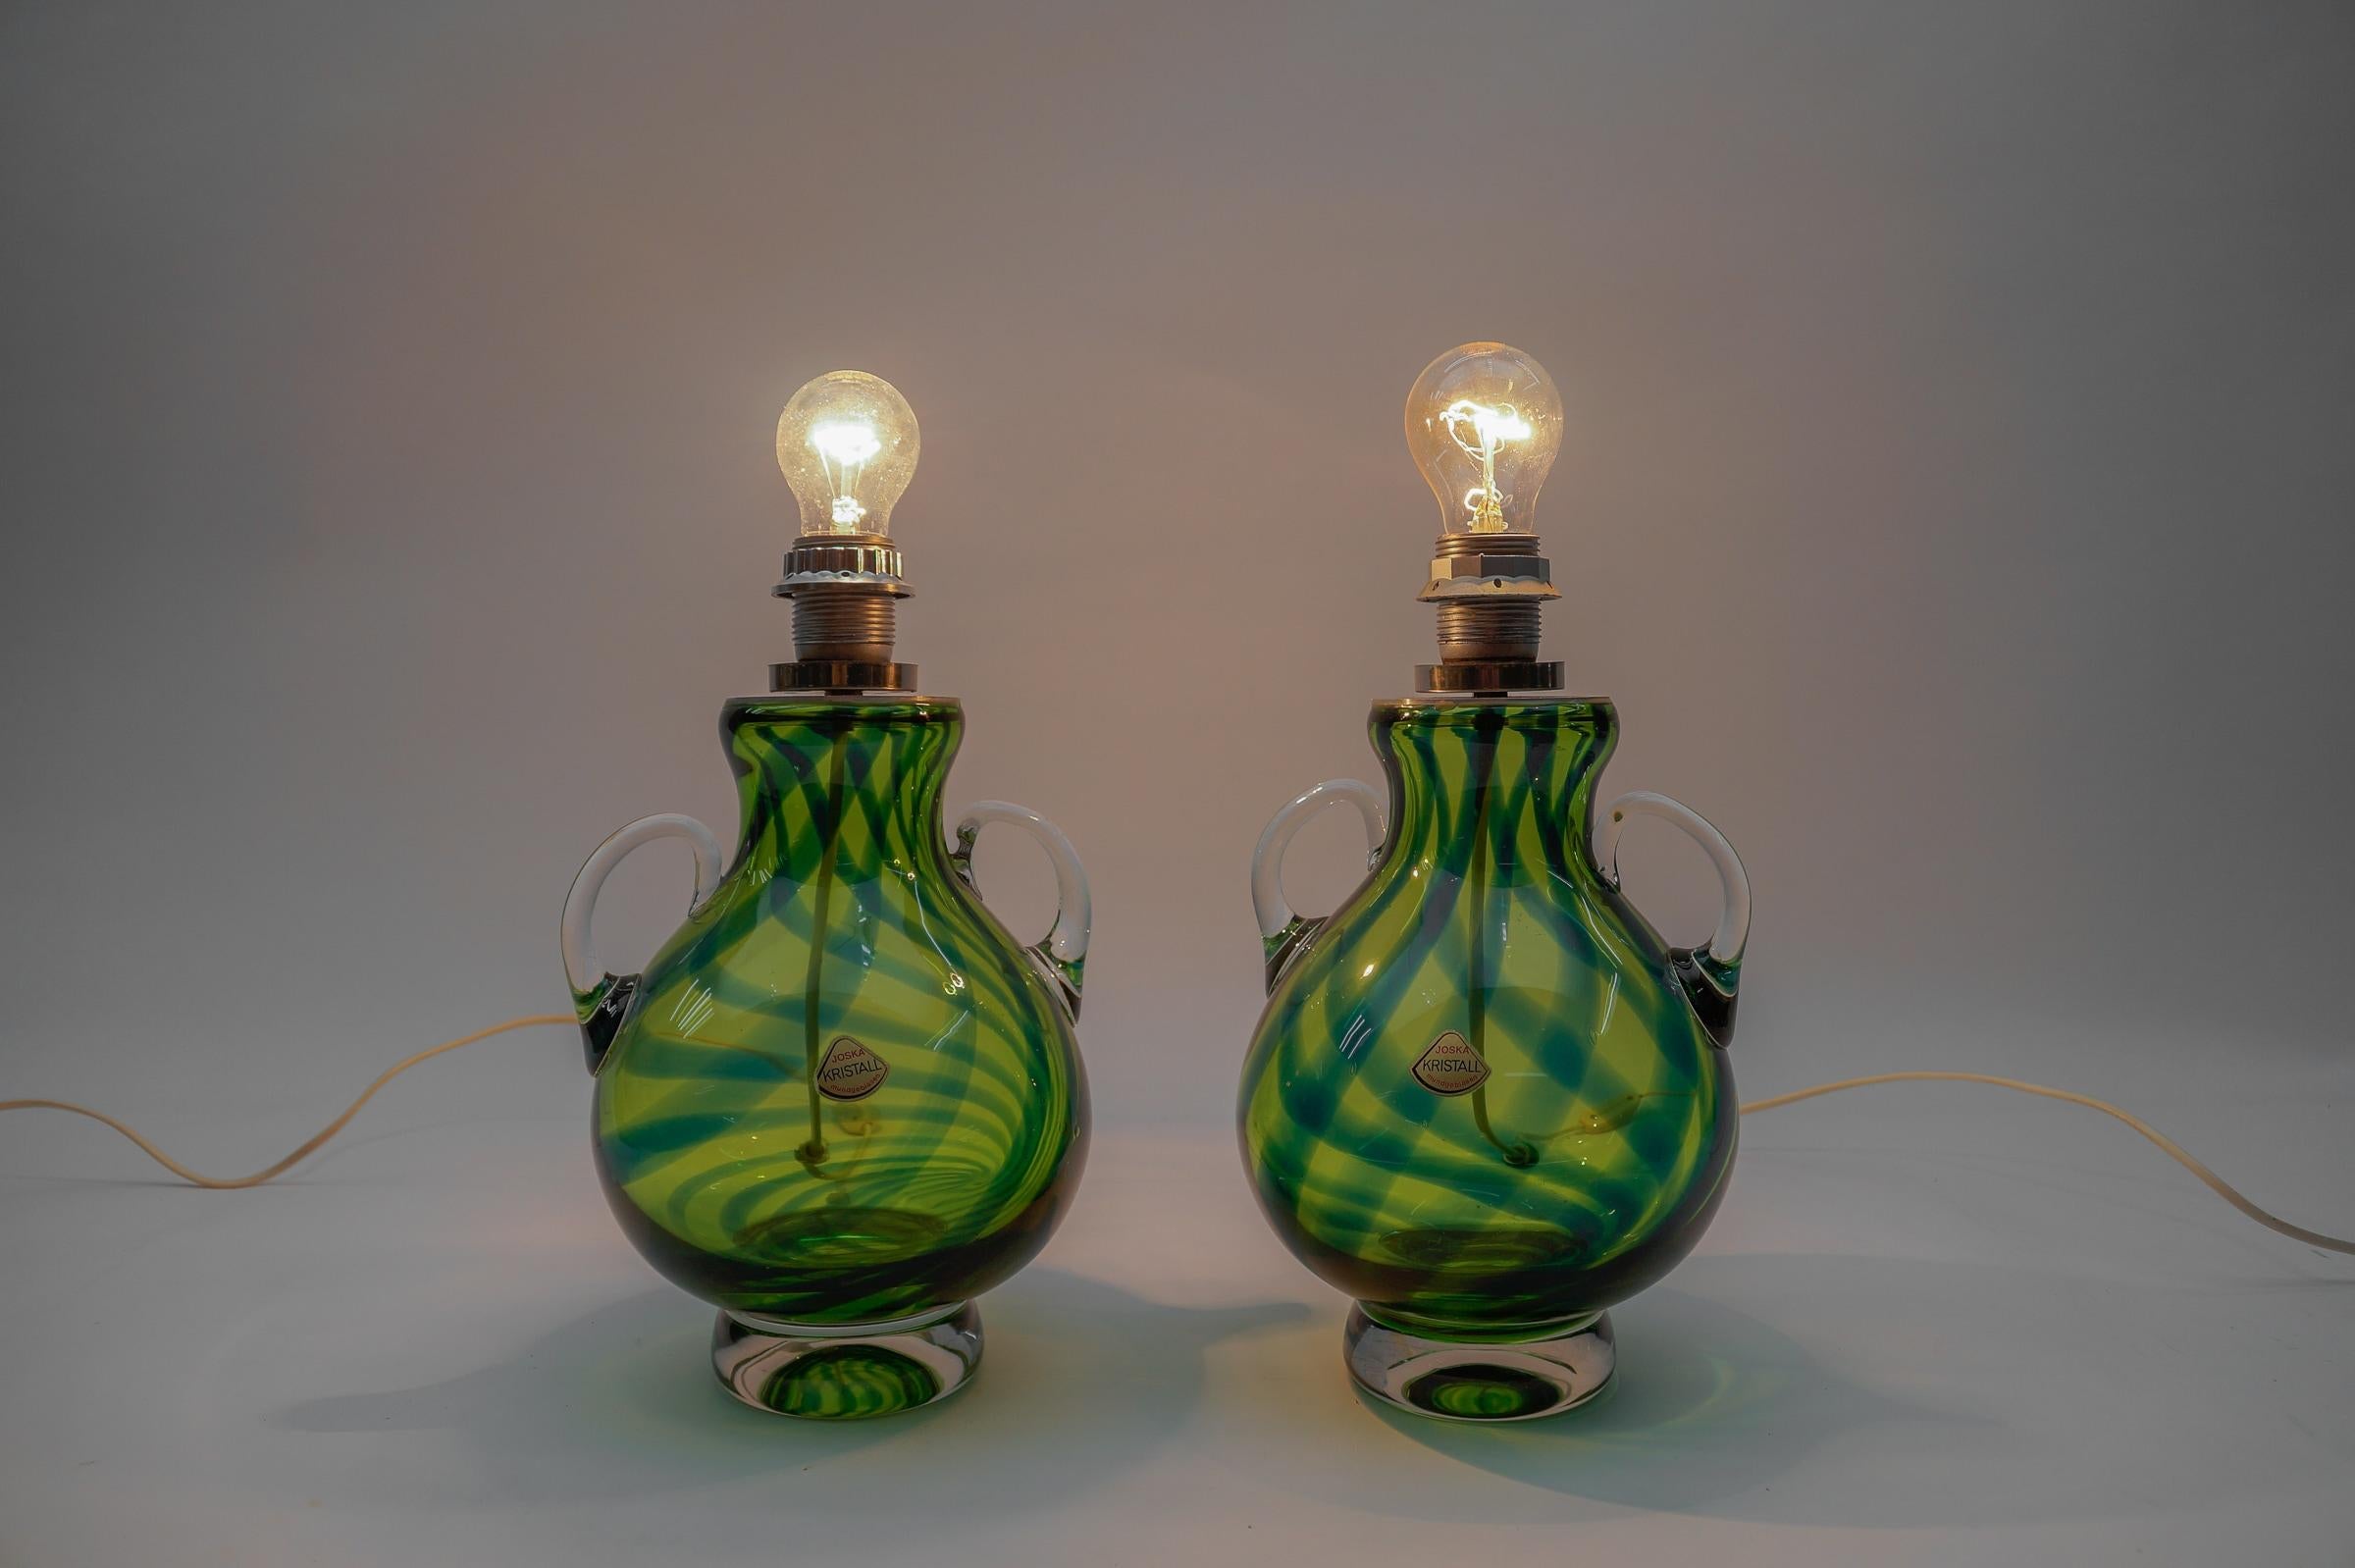 Art Glass Pair Heavy Mid-Century Modern Handblown Glass Table Lamp by Joska, 1970s Germany For Sale